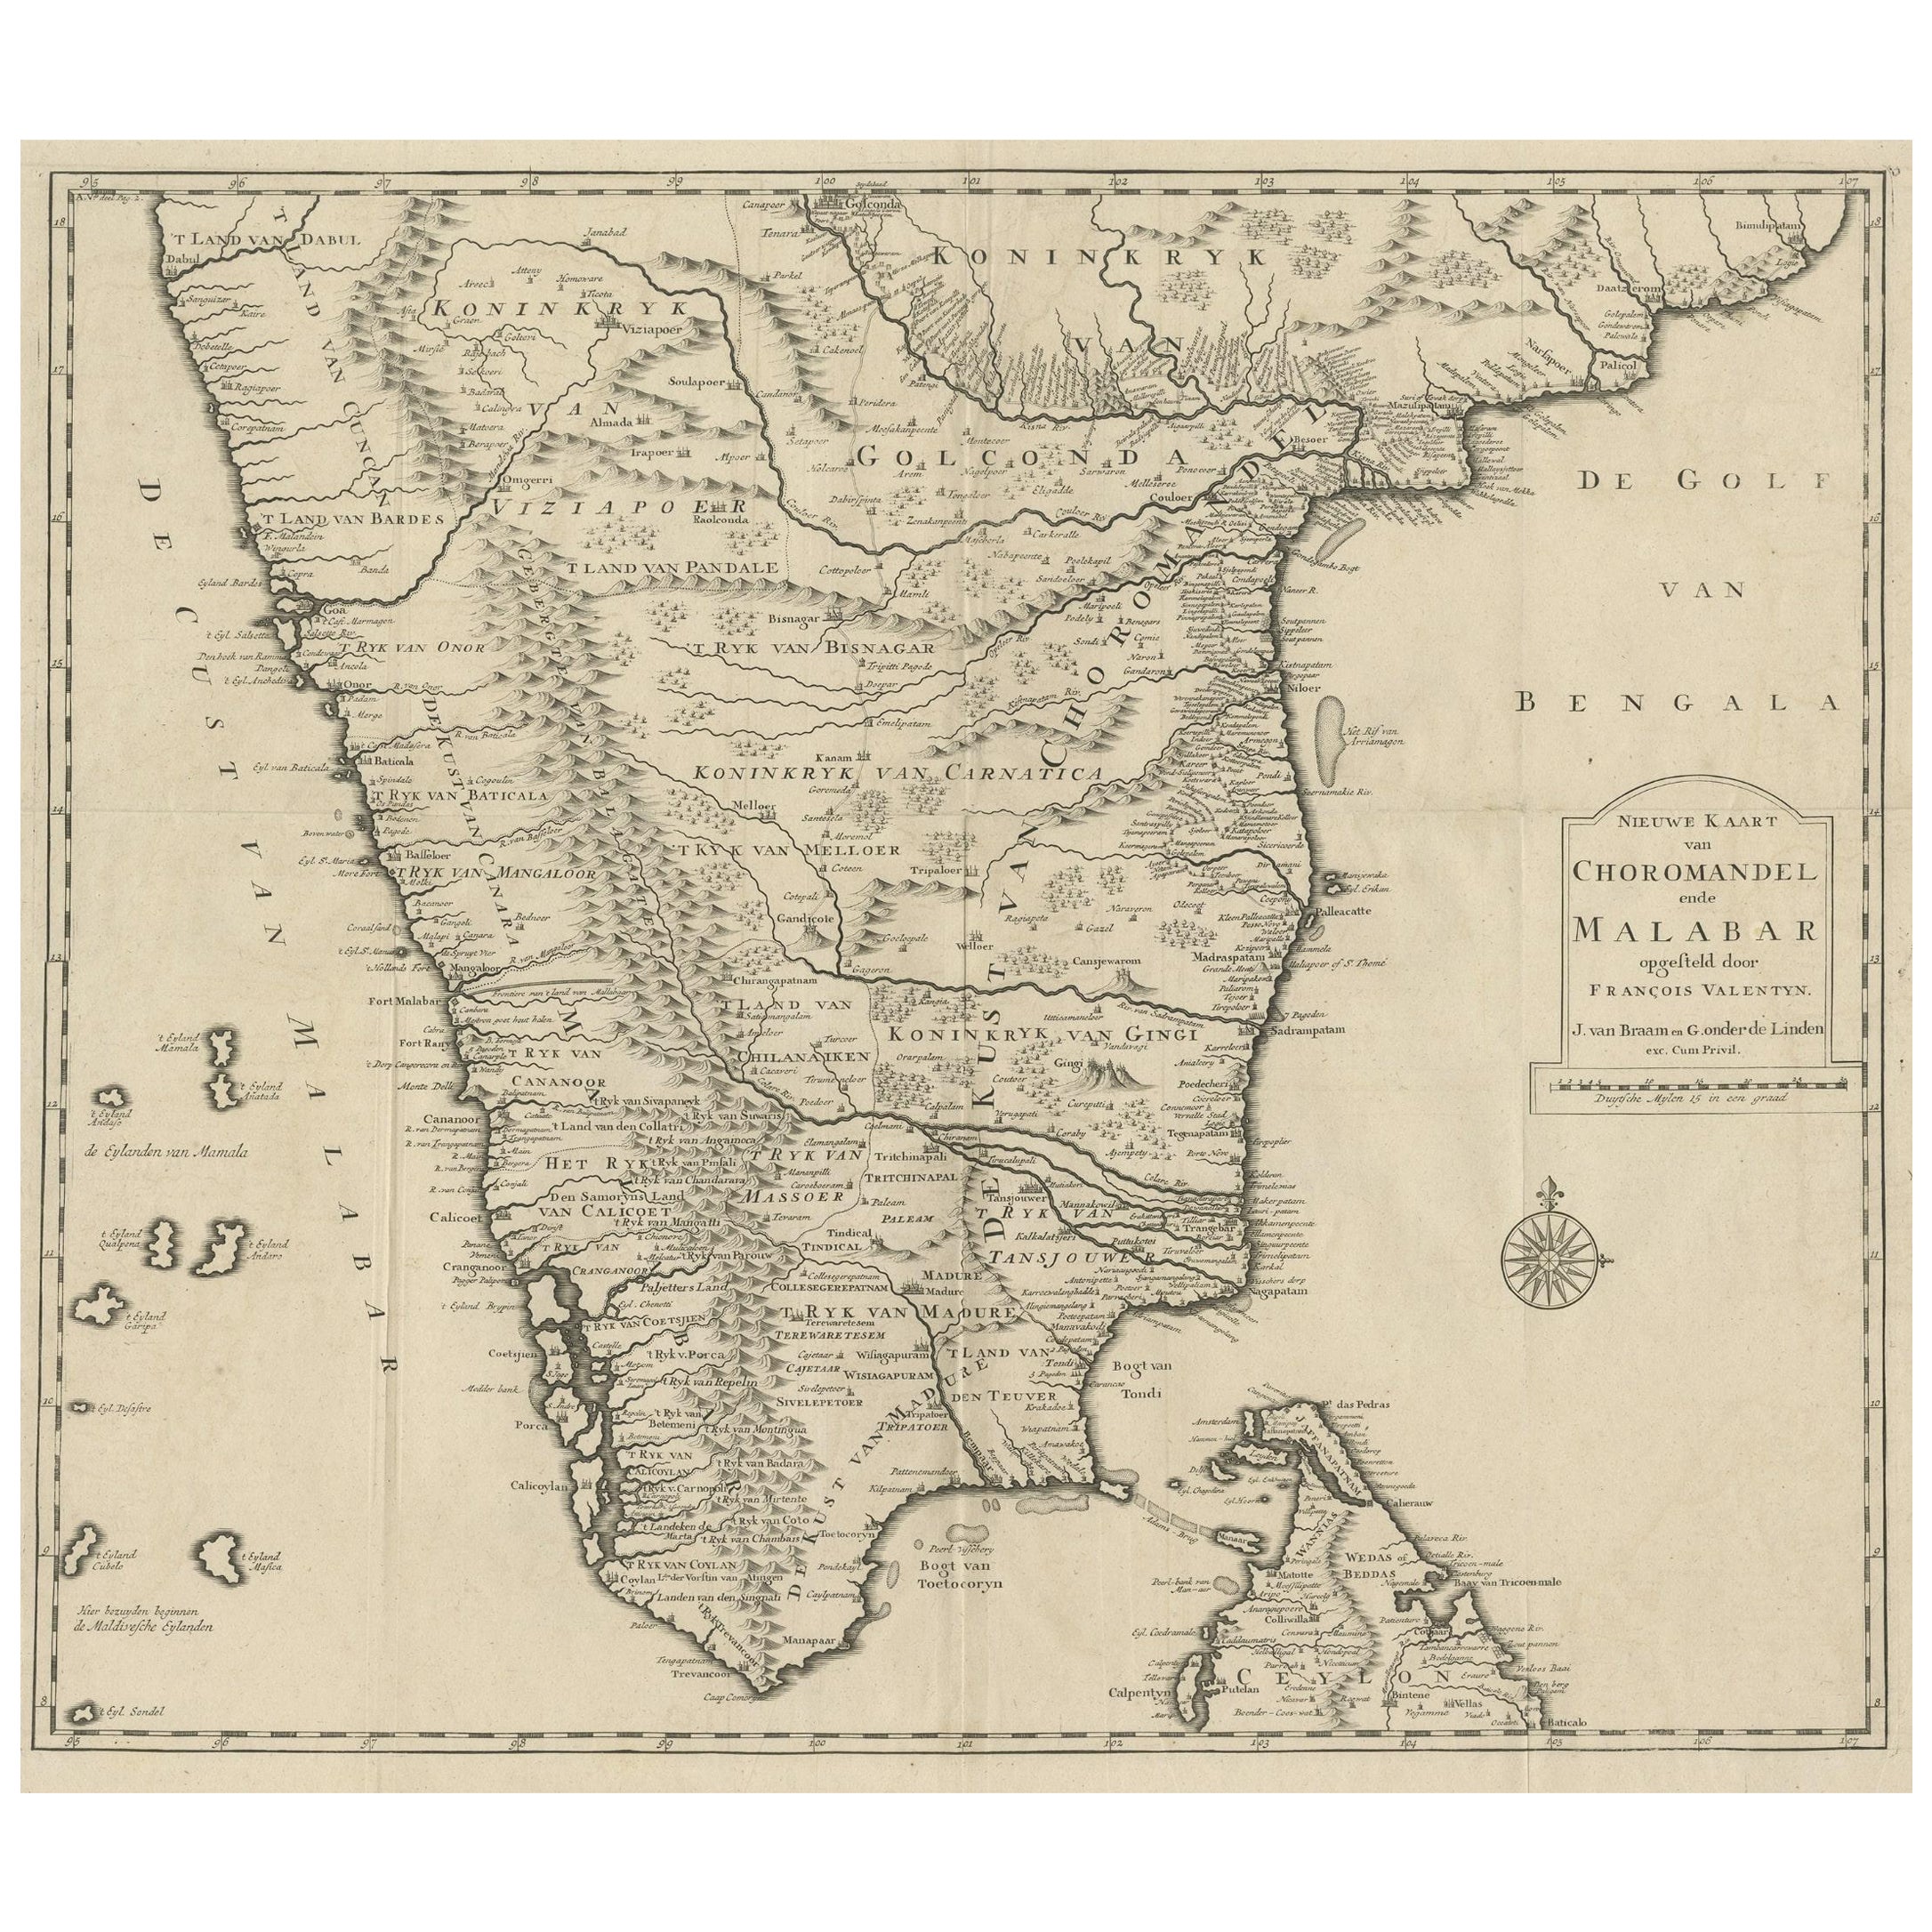 Map of Choromandel & Malabar, Incl Kerala, Tamil Nadu & Part of Sri Lanka, 1726